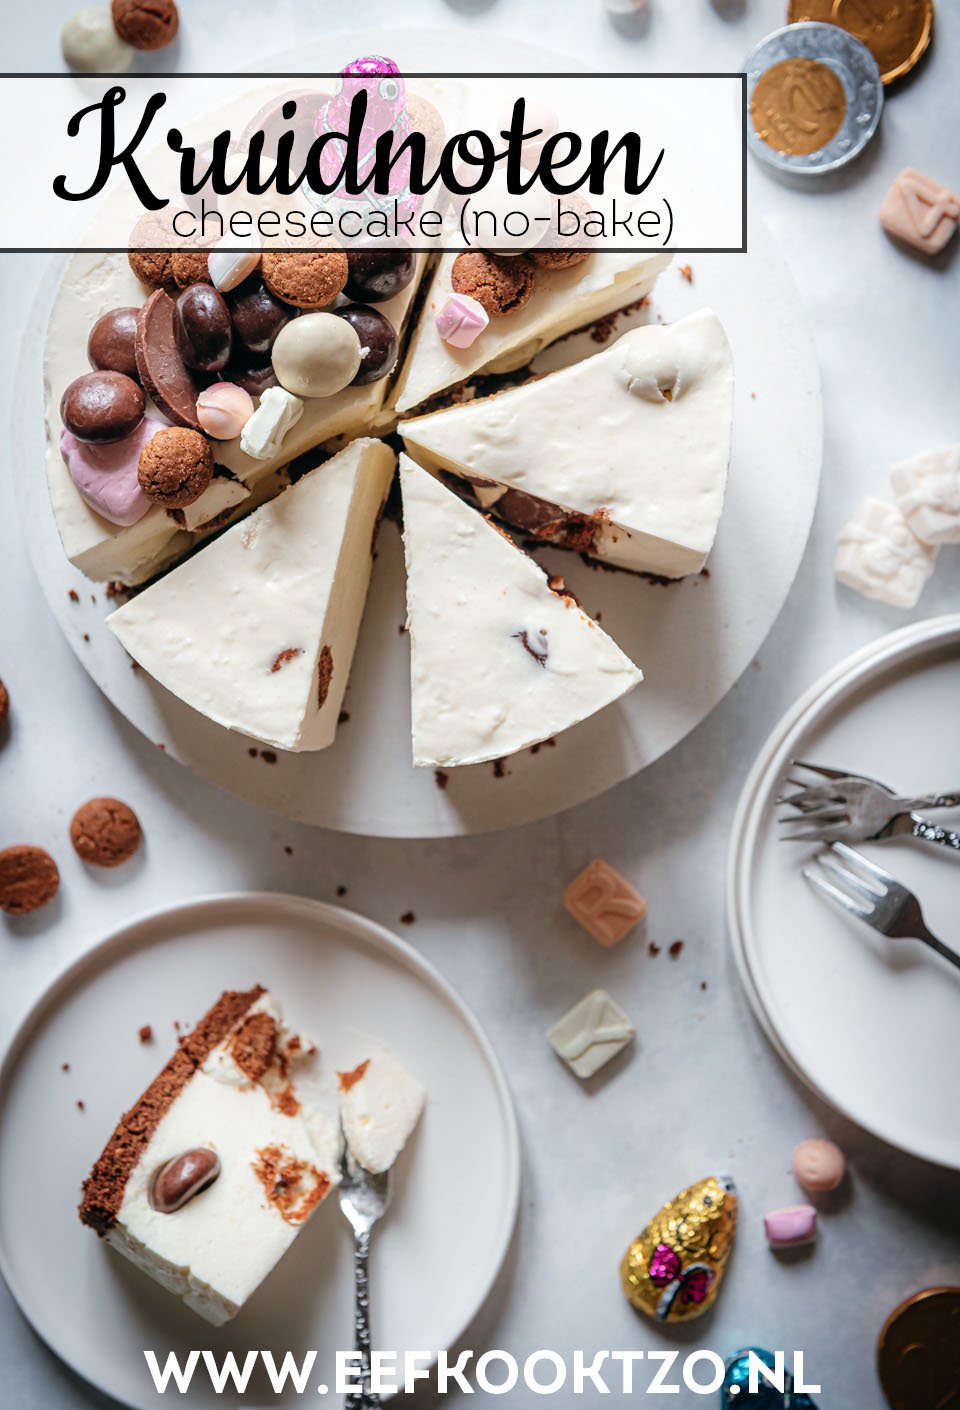 Kruidnoten cheesecake Pinterest Collage